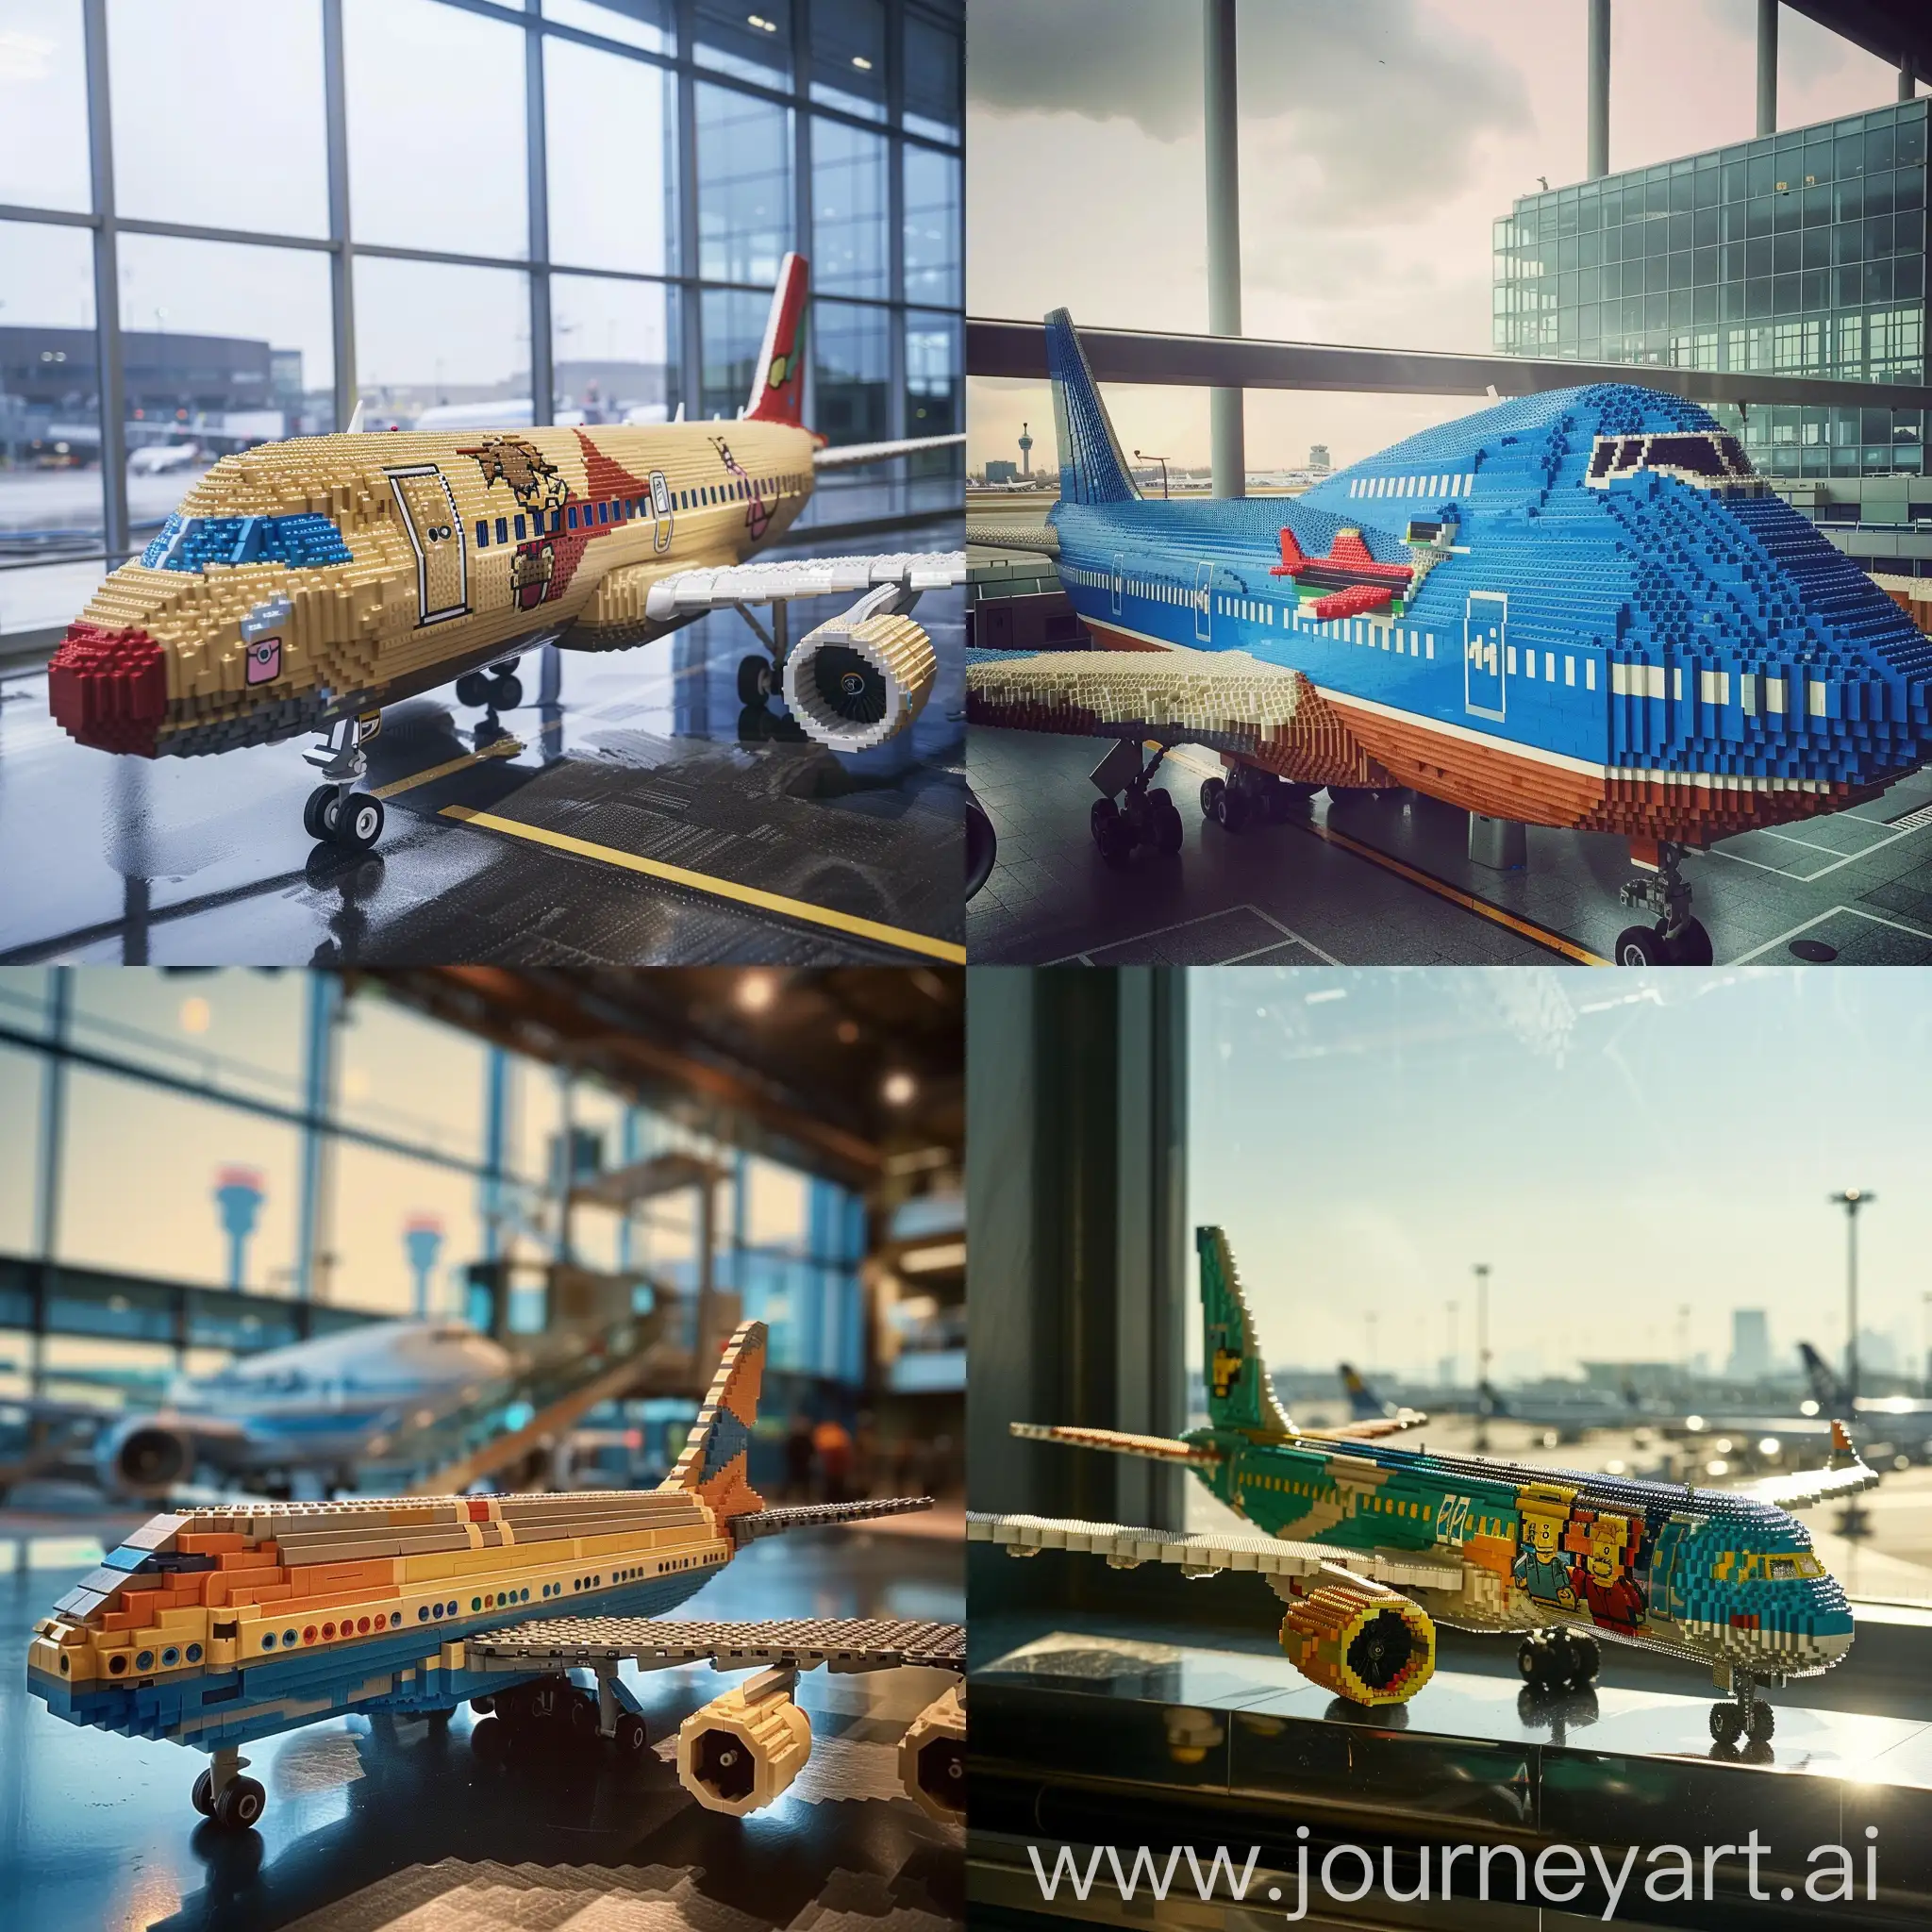 Lego-Airplane-Displayed-at-Airport-Terminal